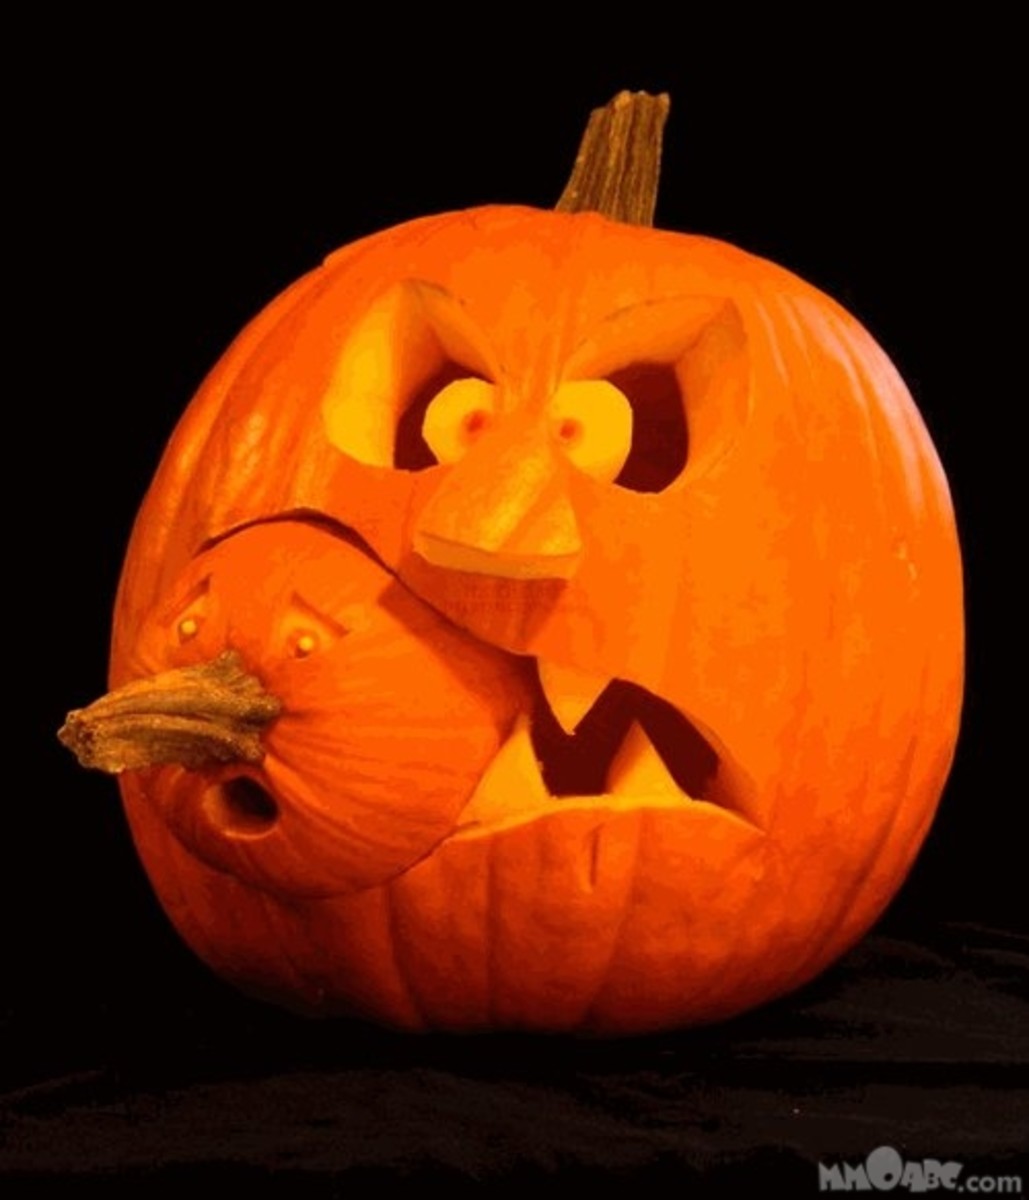 why-do-we-carve-pumpkins-on-halloween-the-us-sun